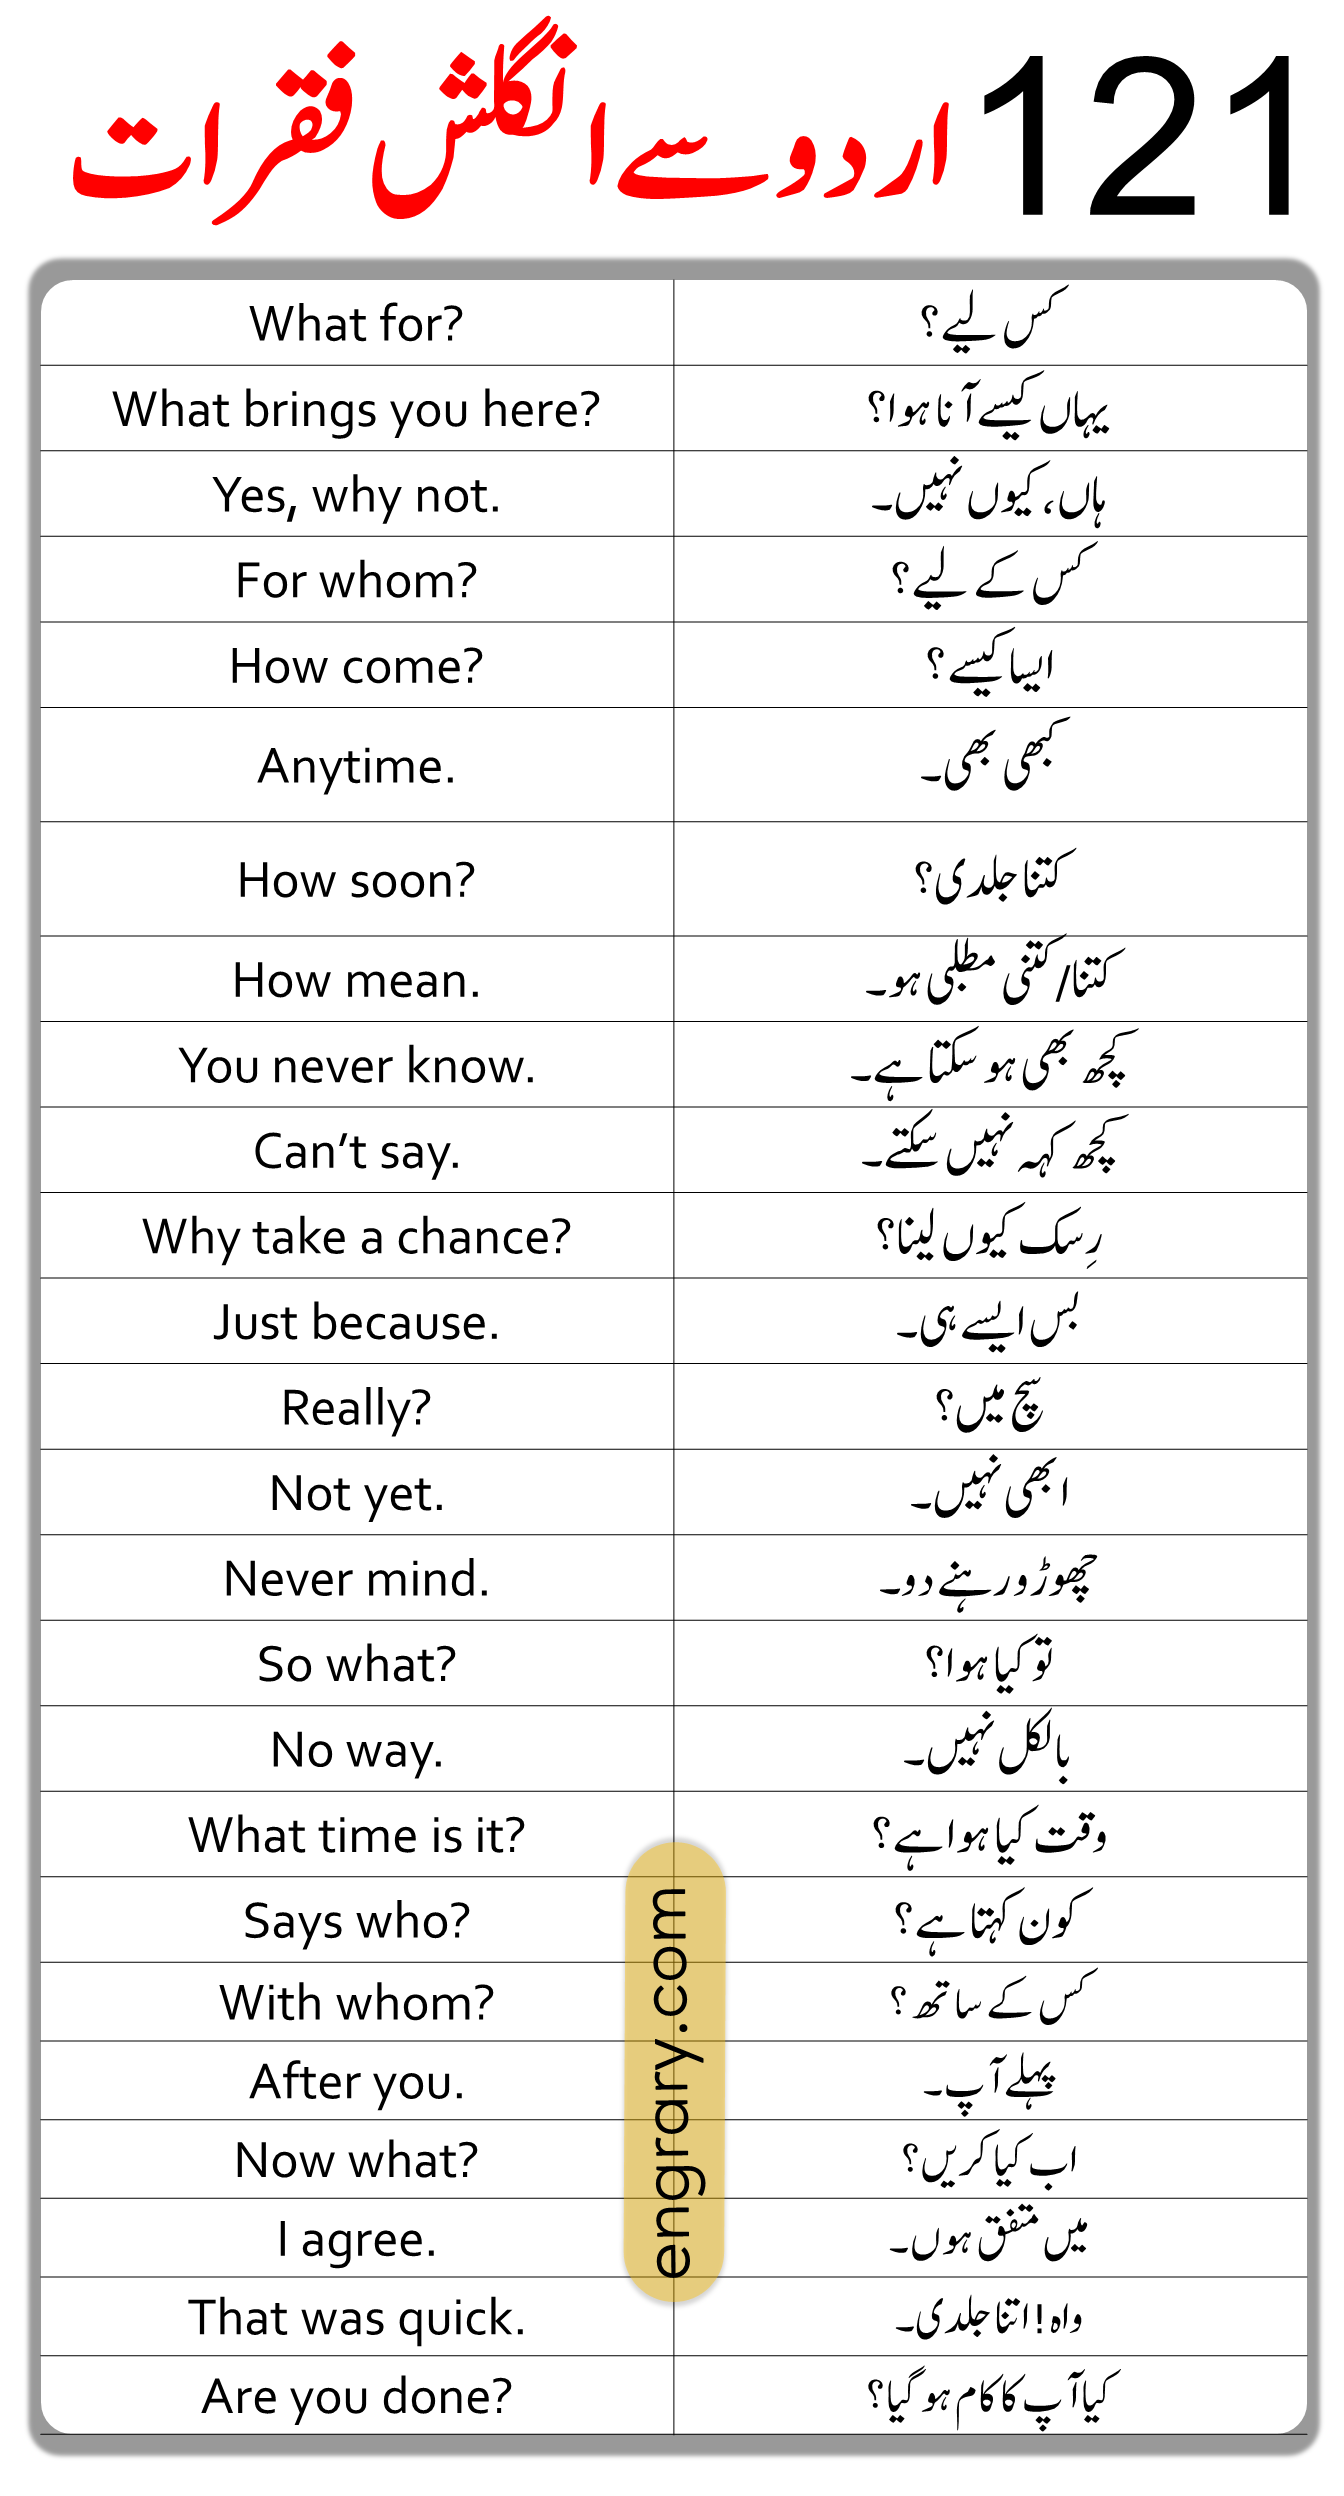 no way meaning in urdu